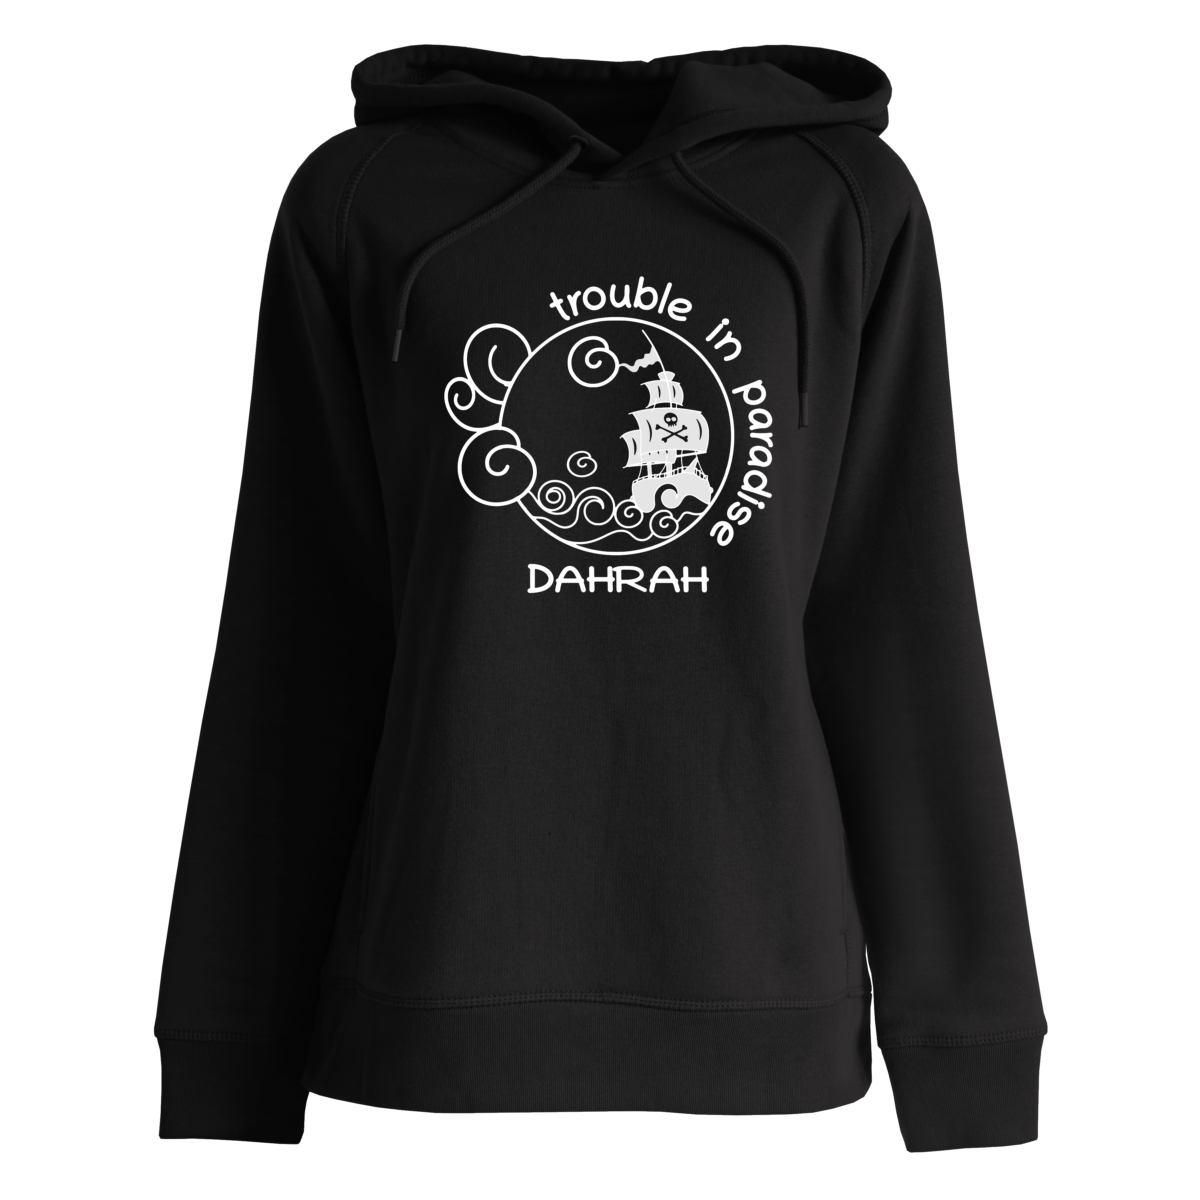 Beautiful high quality organic hoodie with print of a pirate ship designed by Dahrah Darah Fashion.